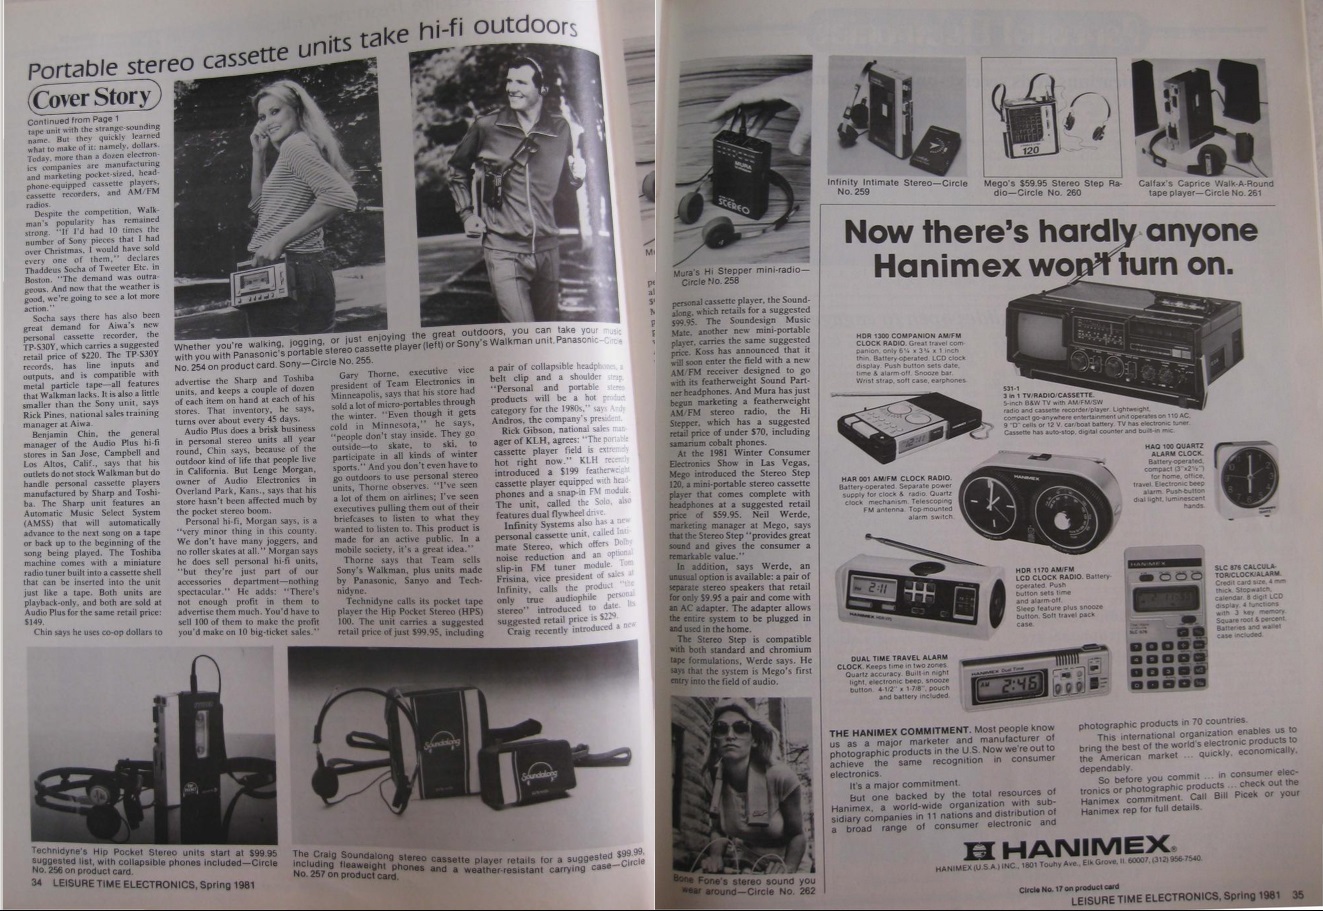 Portable Stereo 1981.jpg